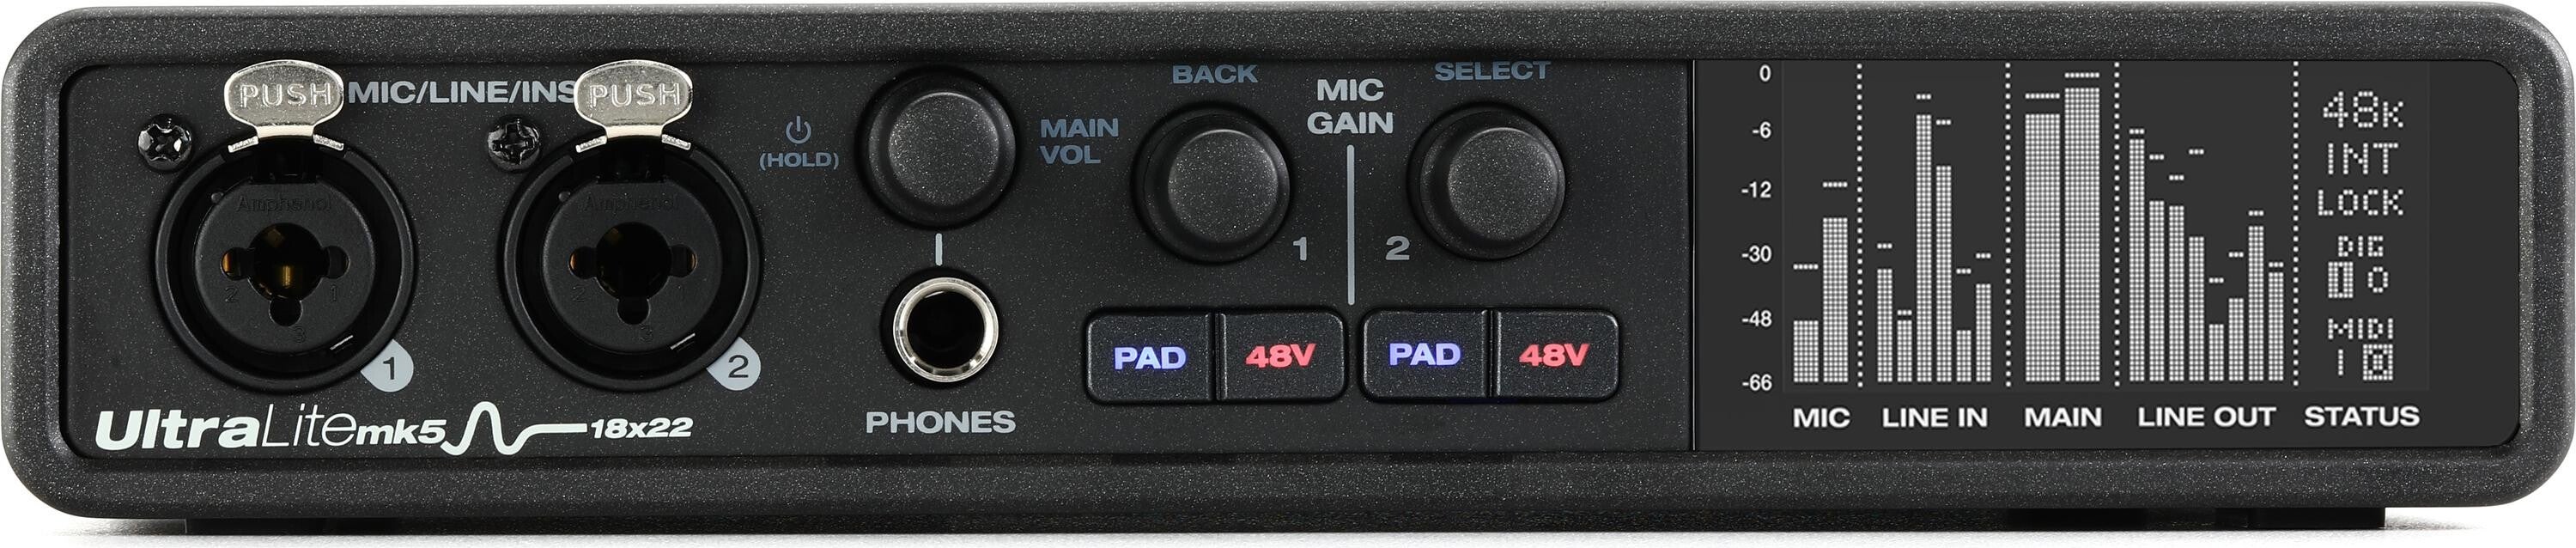 MOTU 624 16x16 Thunderbolt / USB 3.0 Audio Interface with AVB 